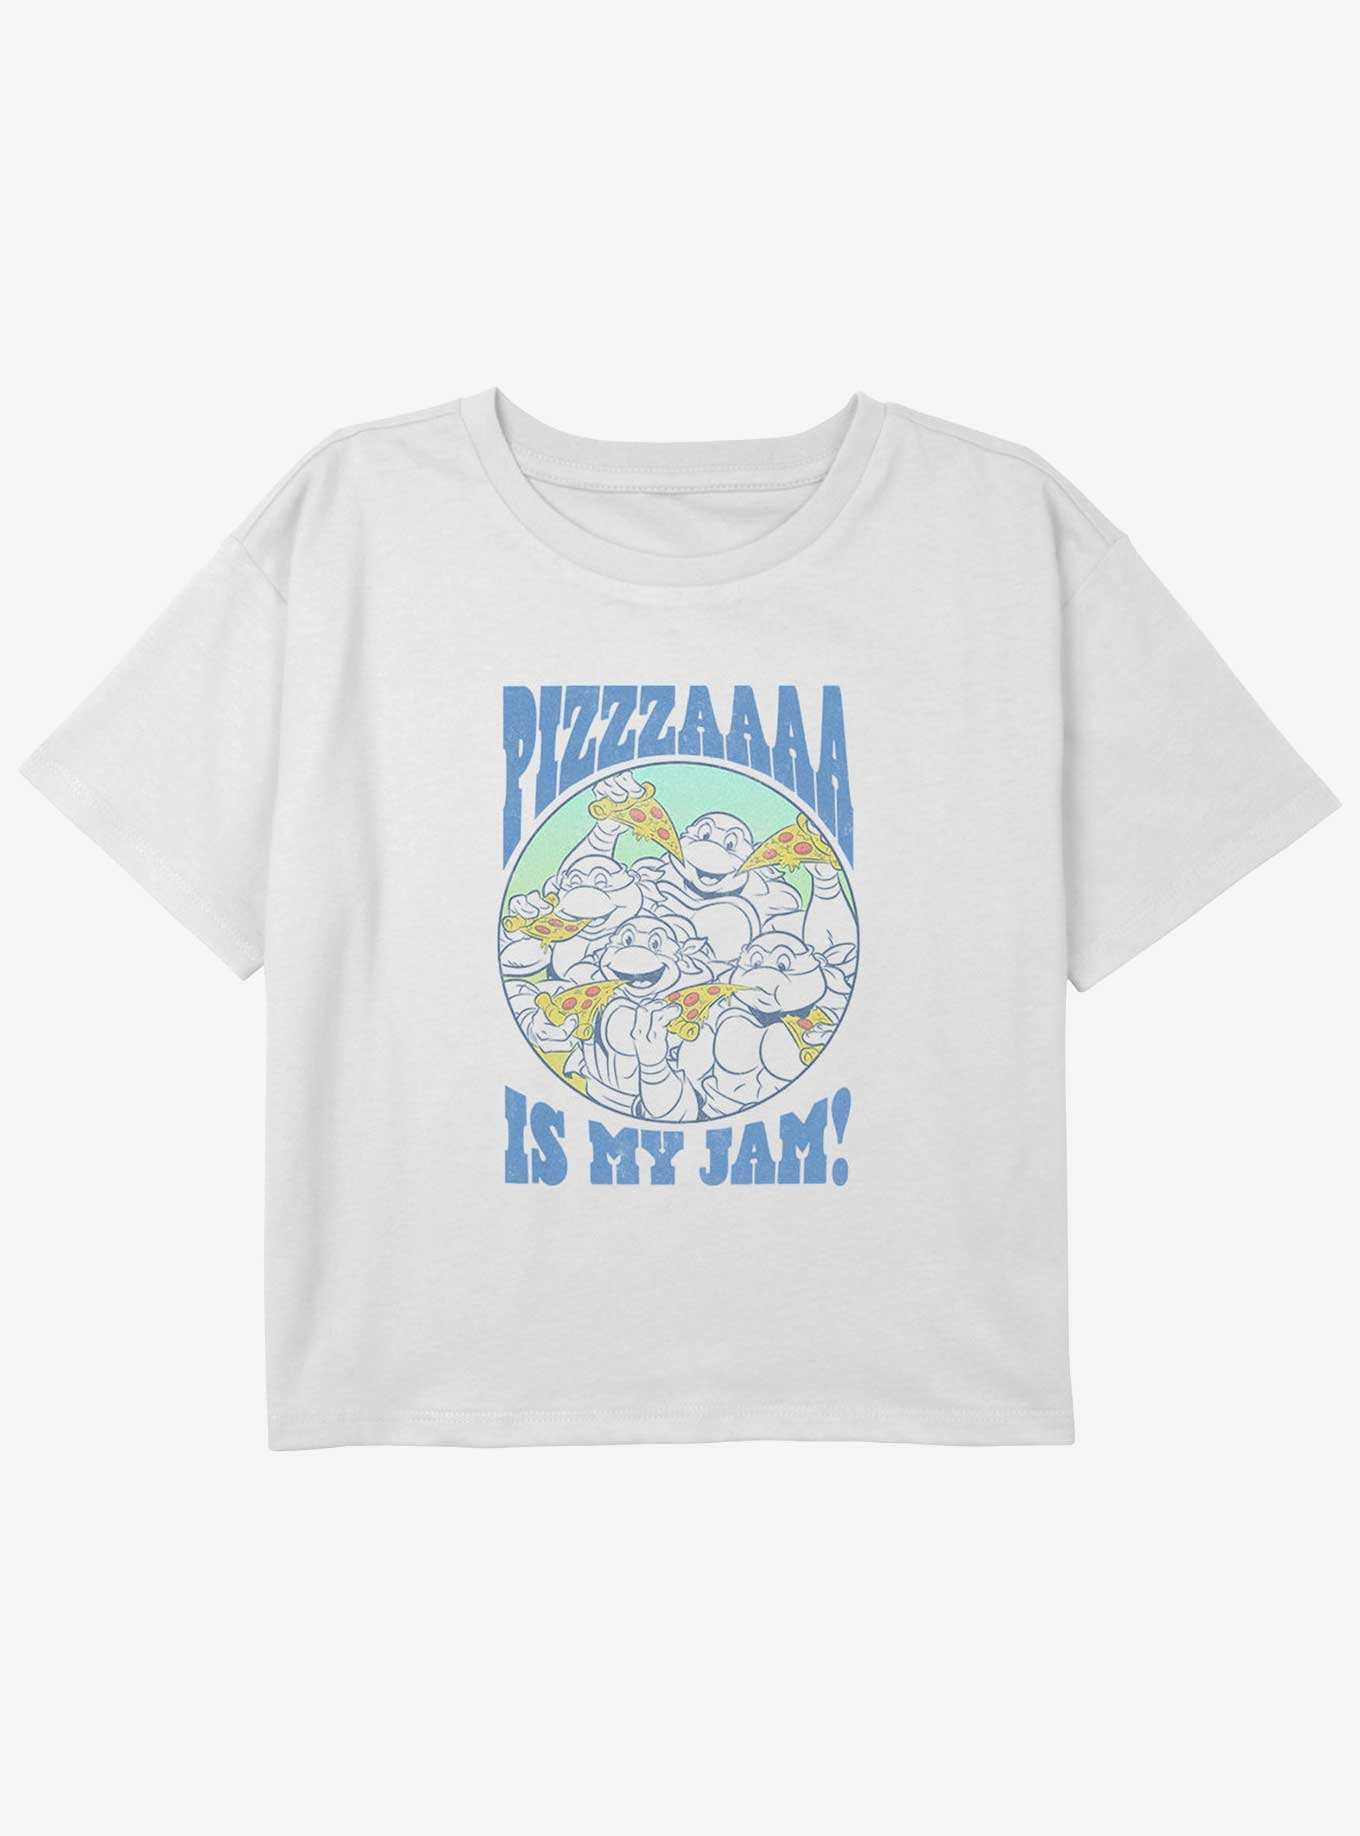 Teenage Mutant Ninja Turtles Pizza Is My Jam Girls Youth Crop T-Shirt, , hi-res